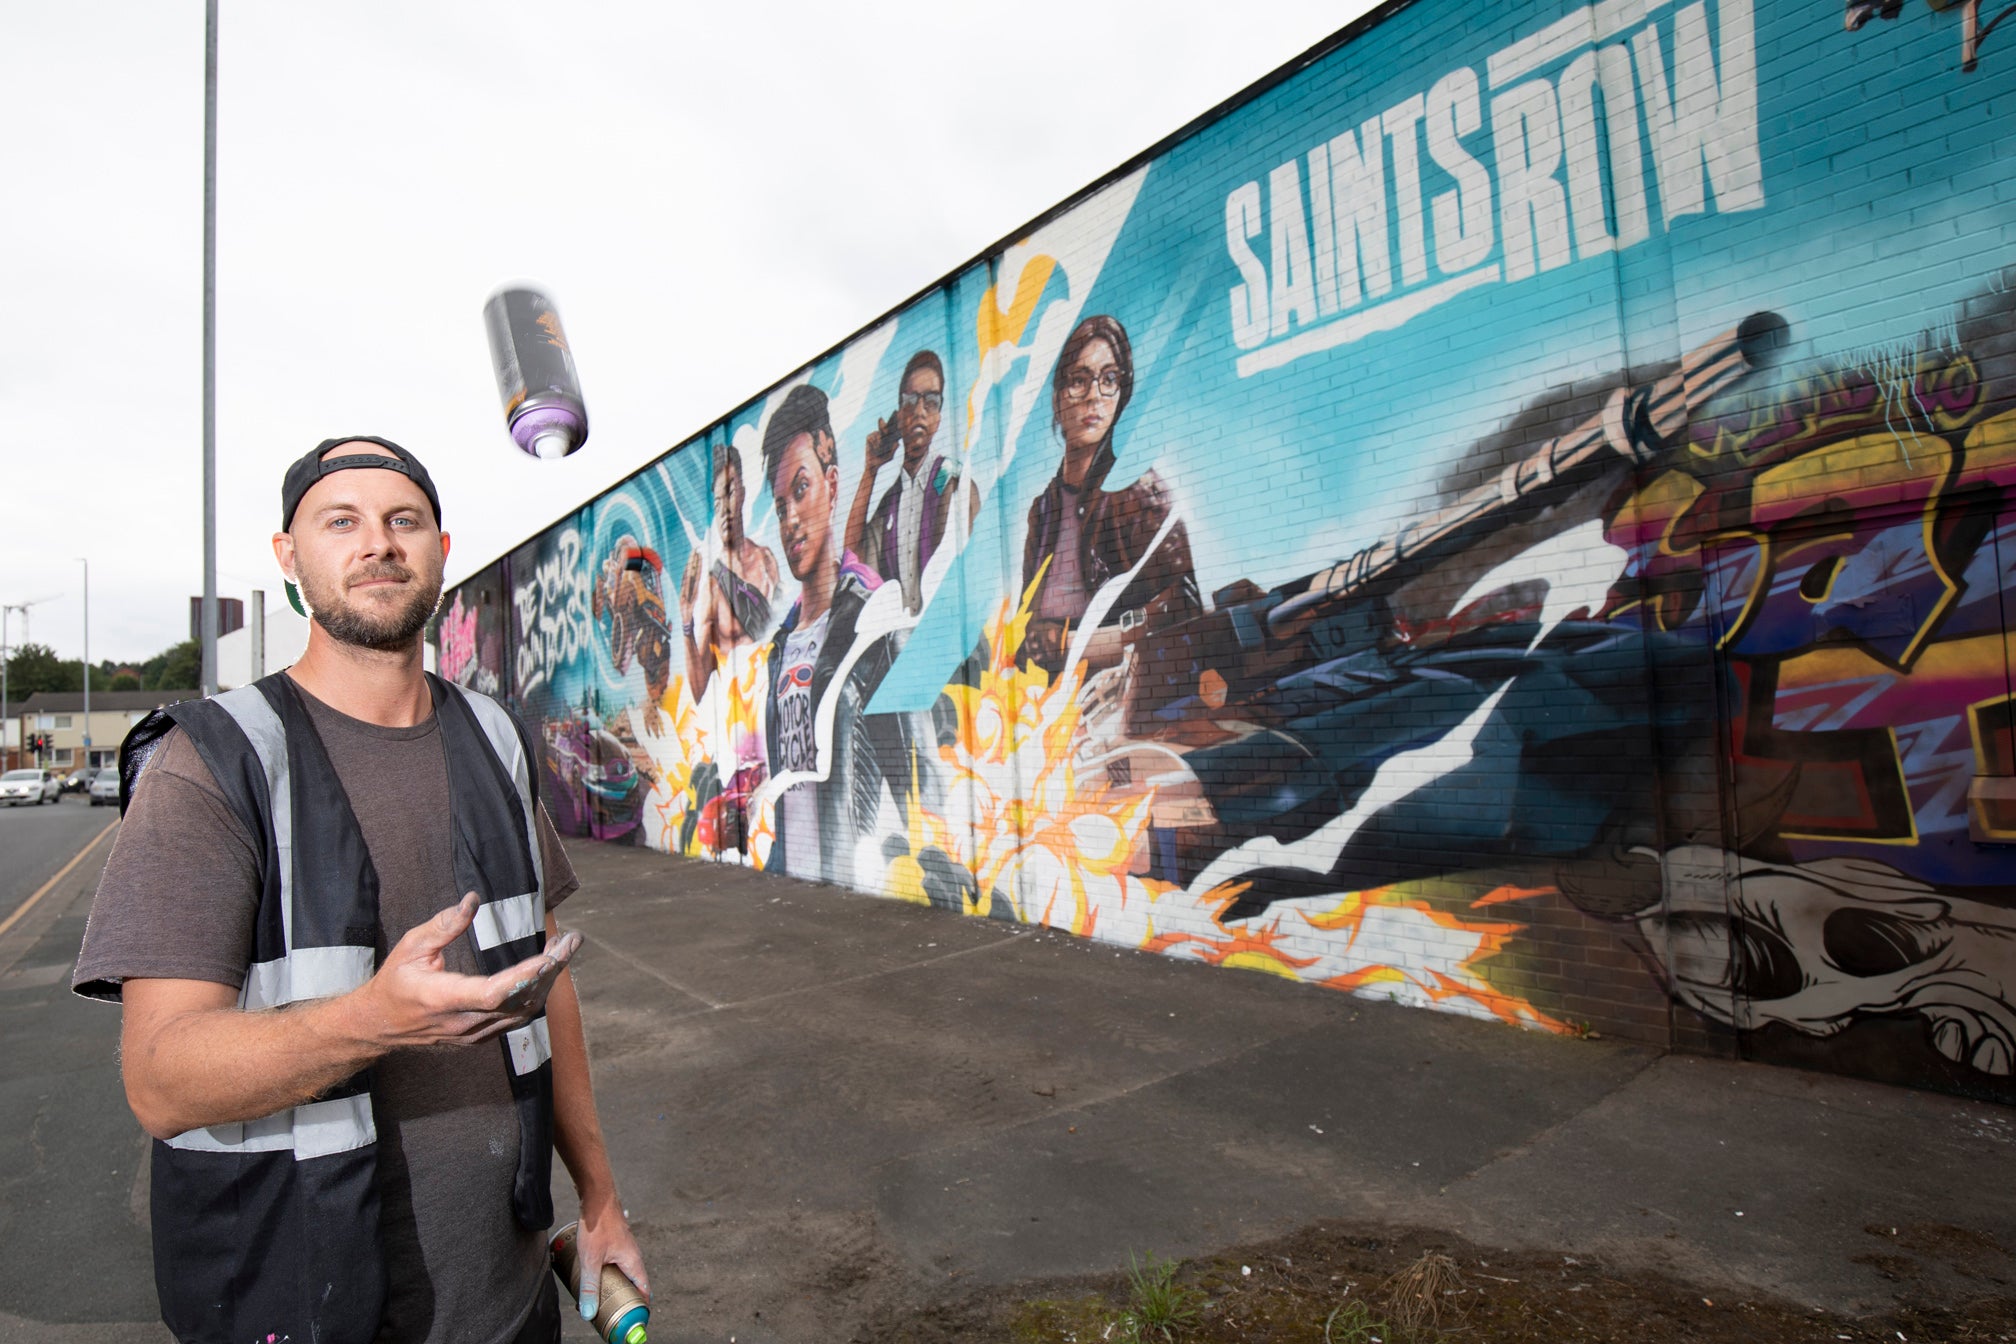 Leeds' Saint Row mural celebrates its "BossFactory" status.